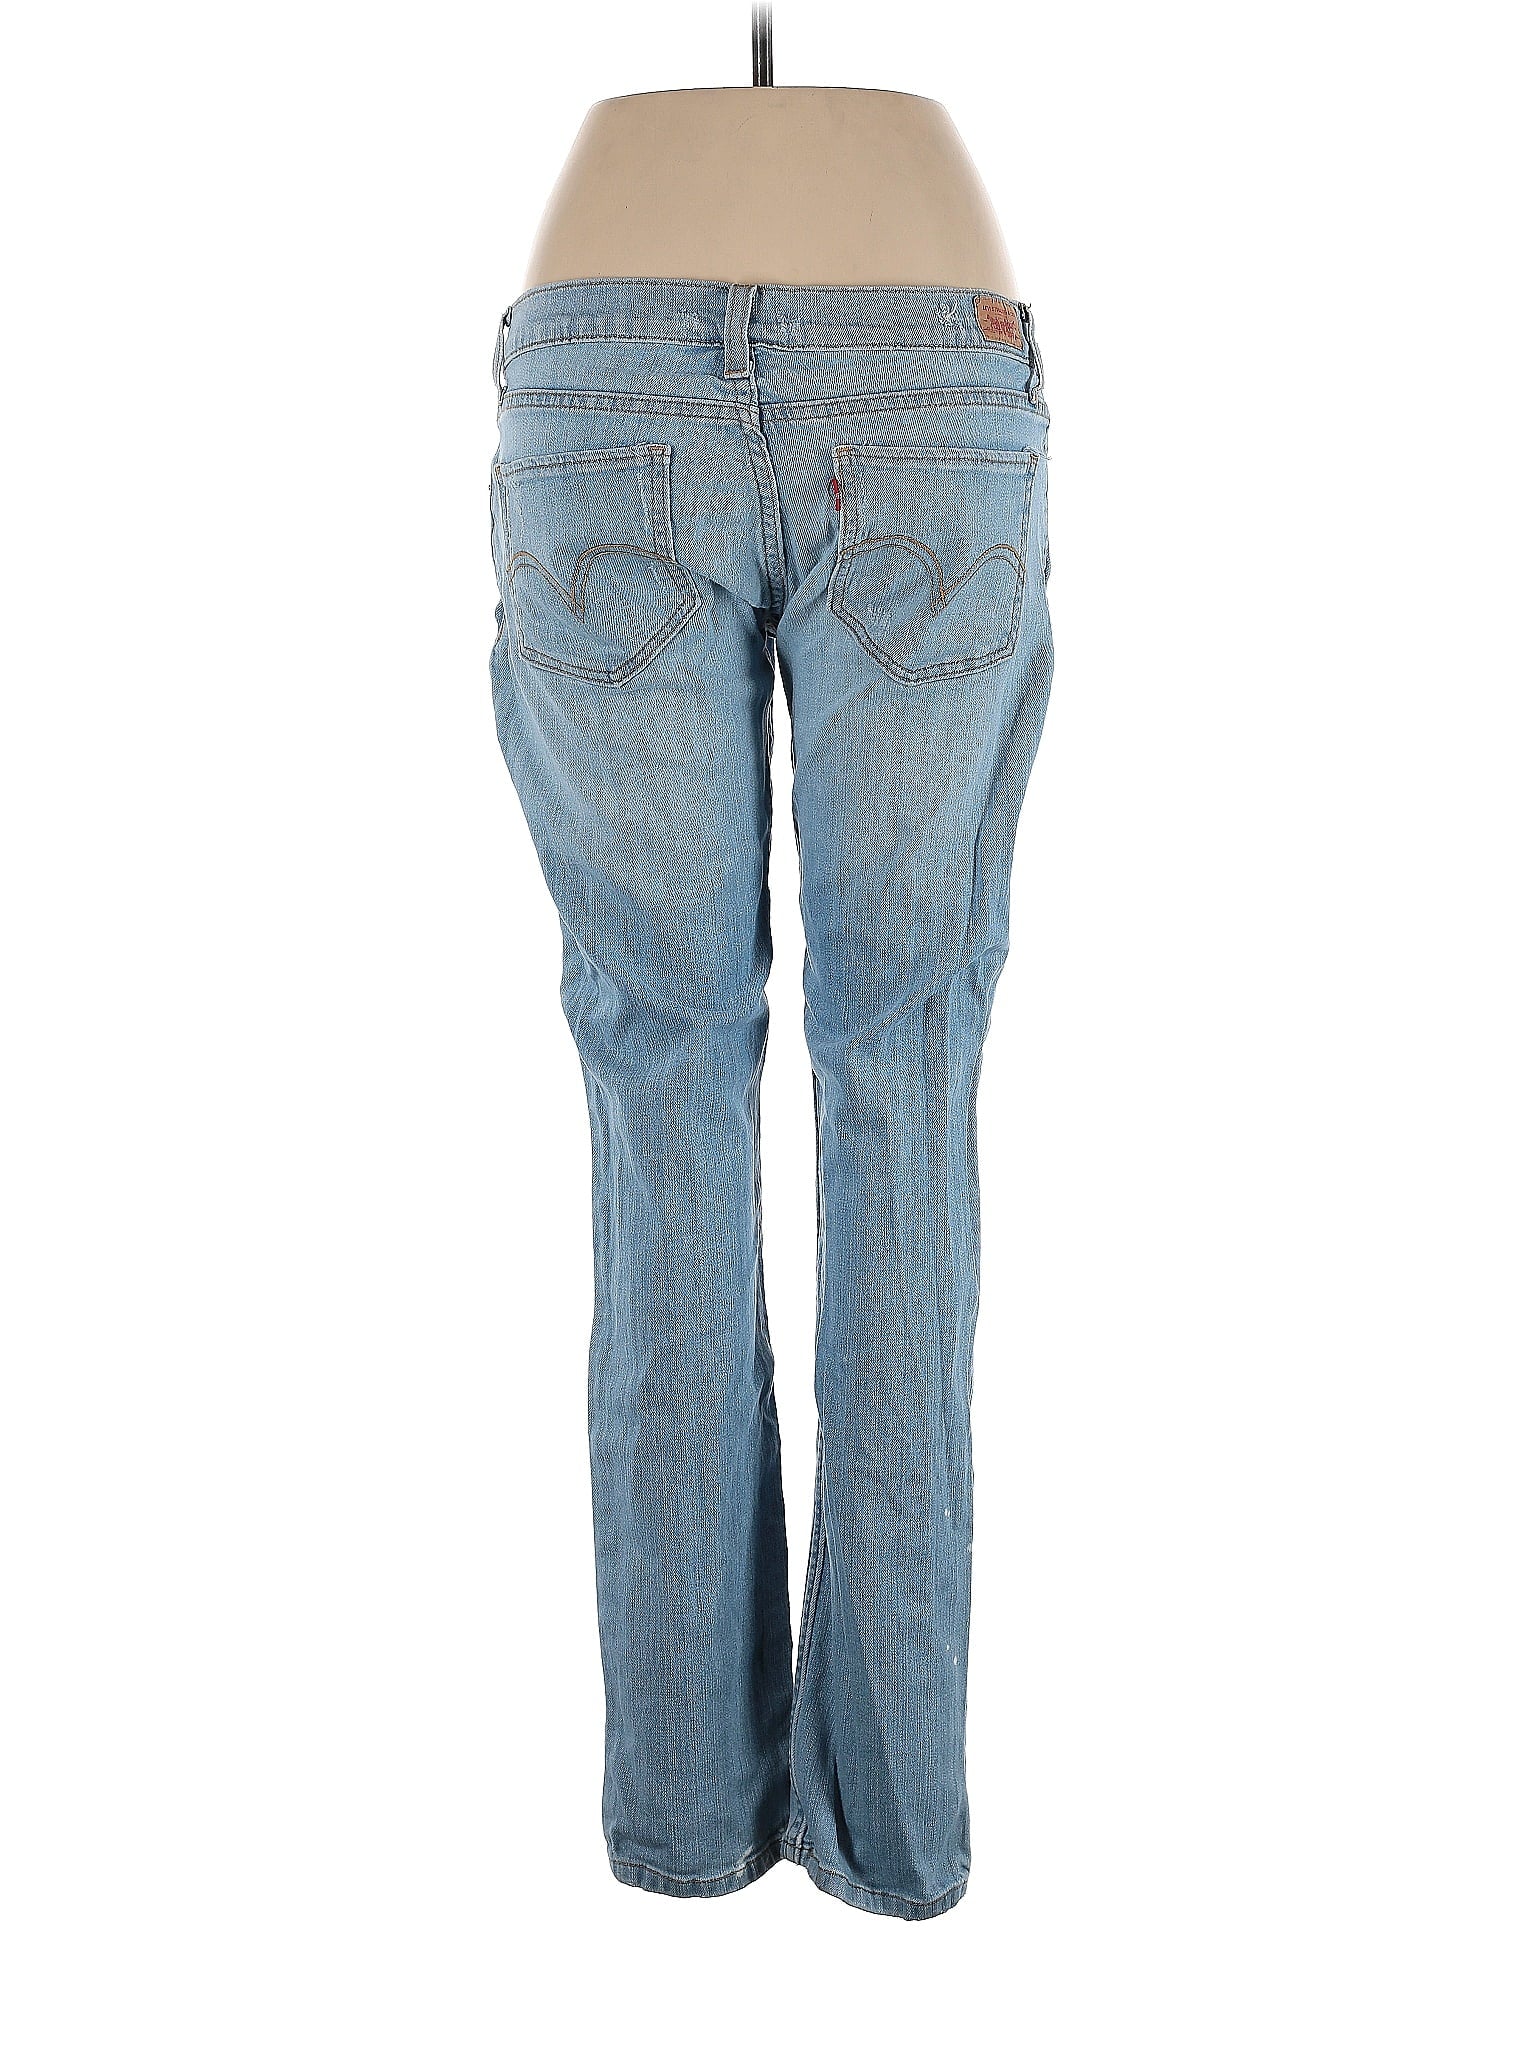 Jeans size - 11